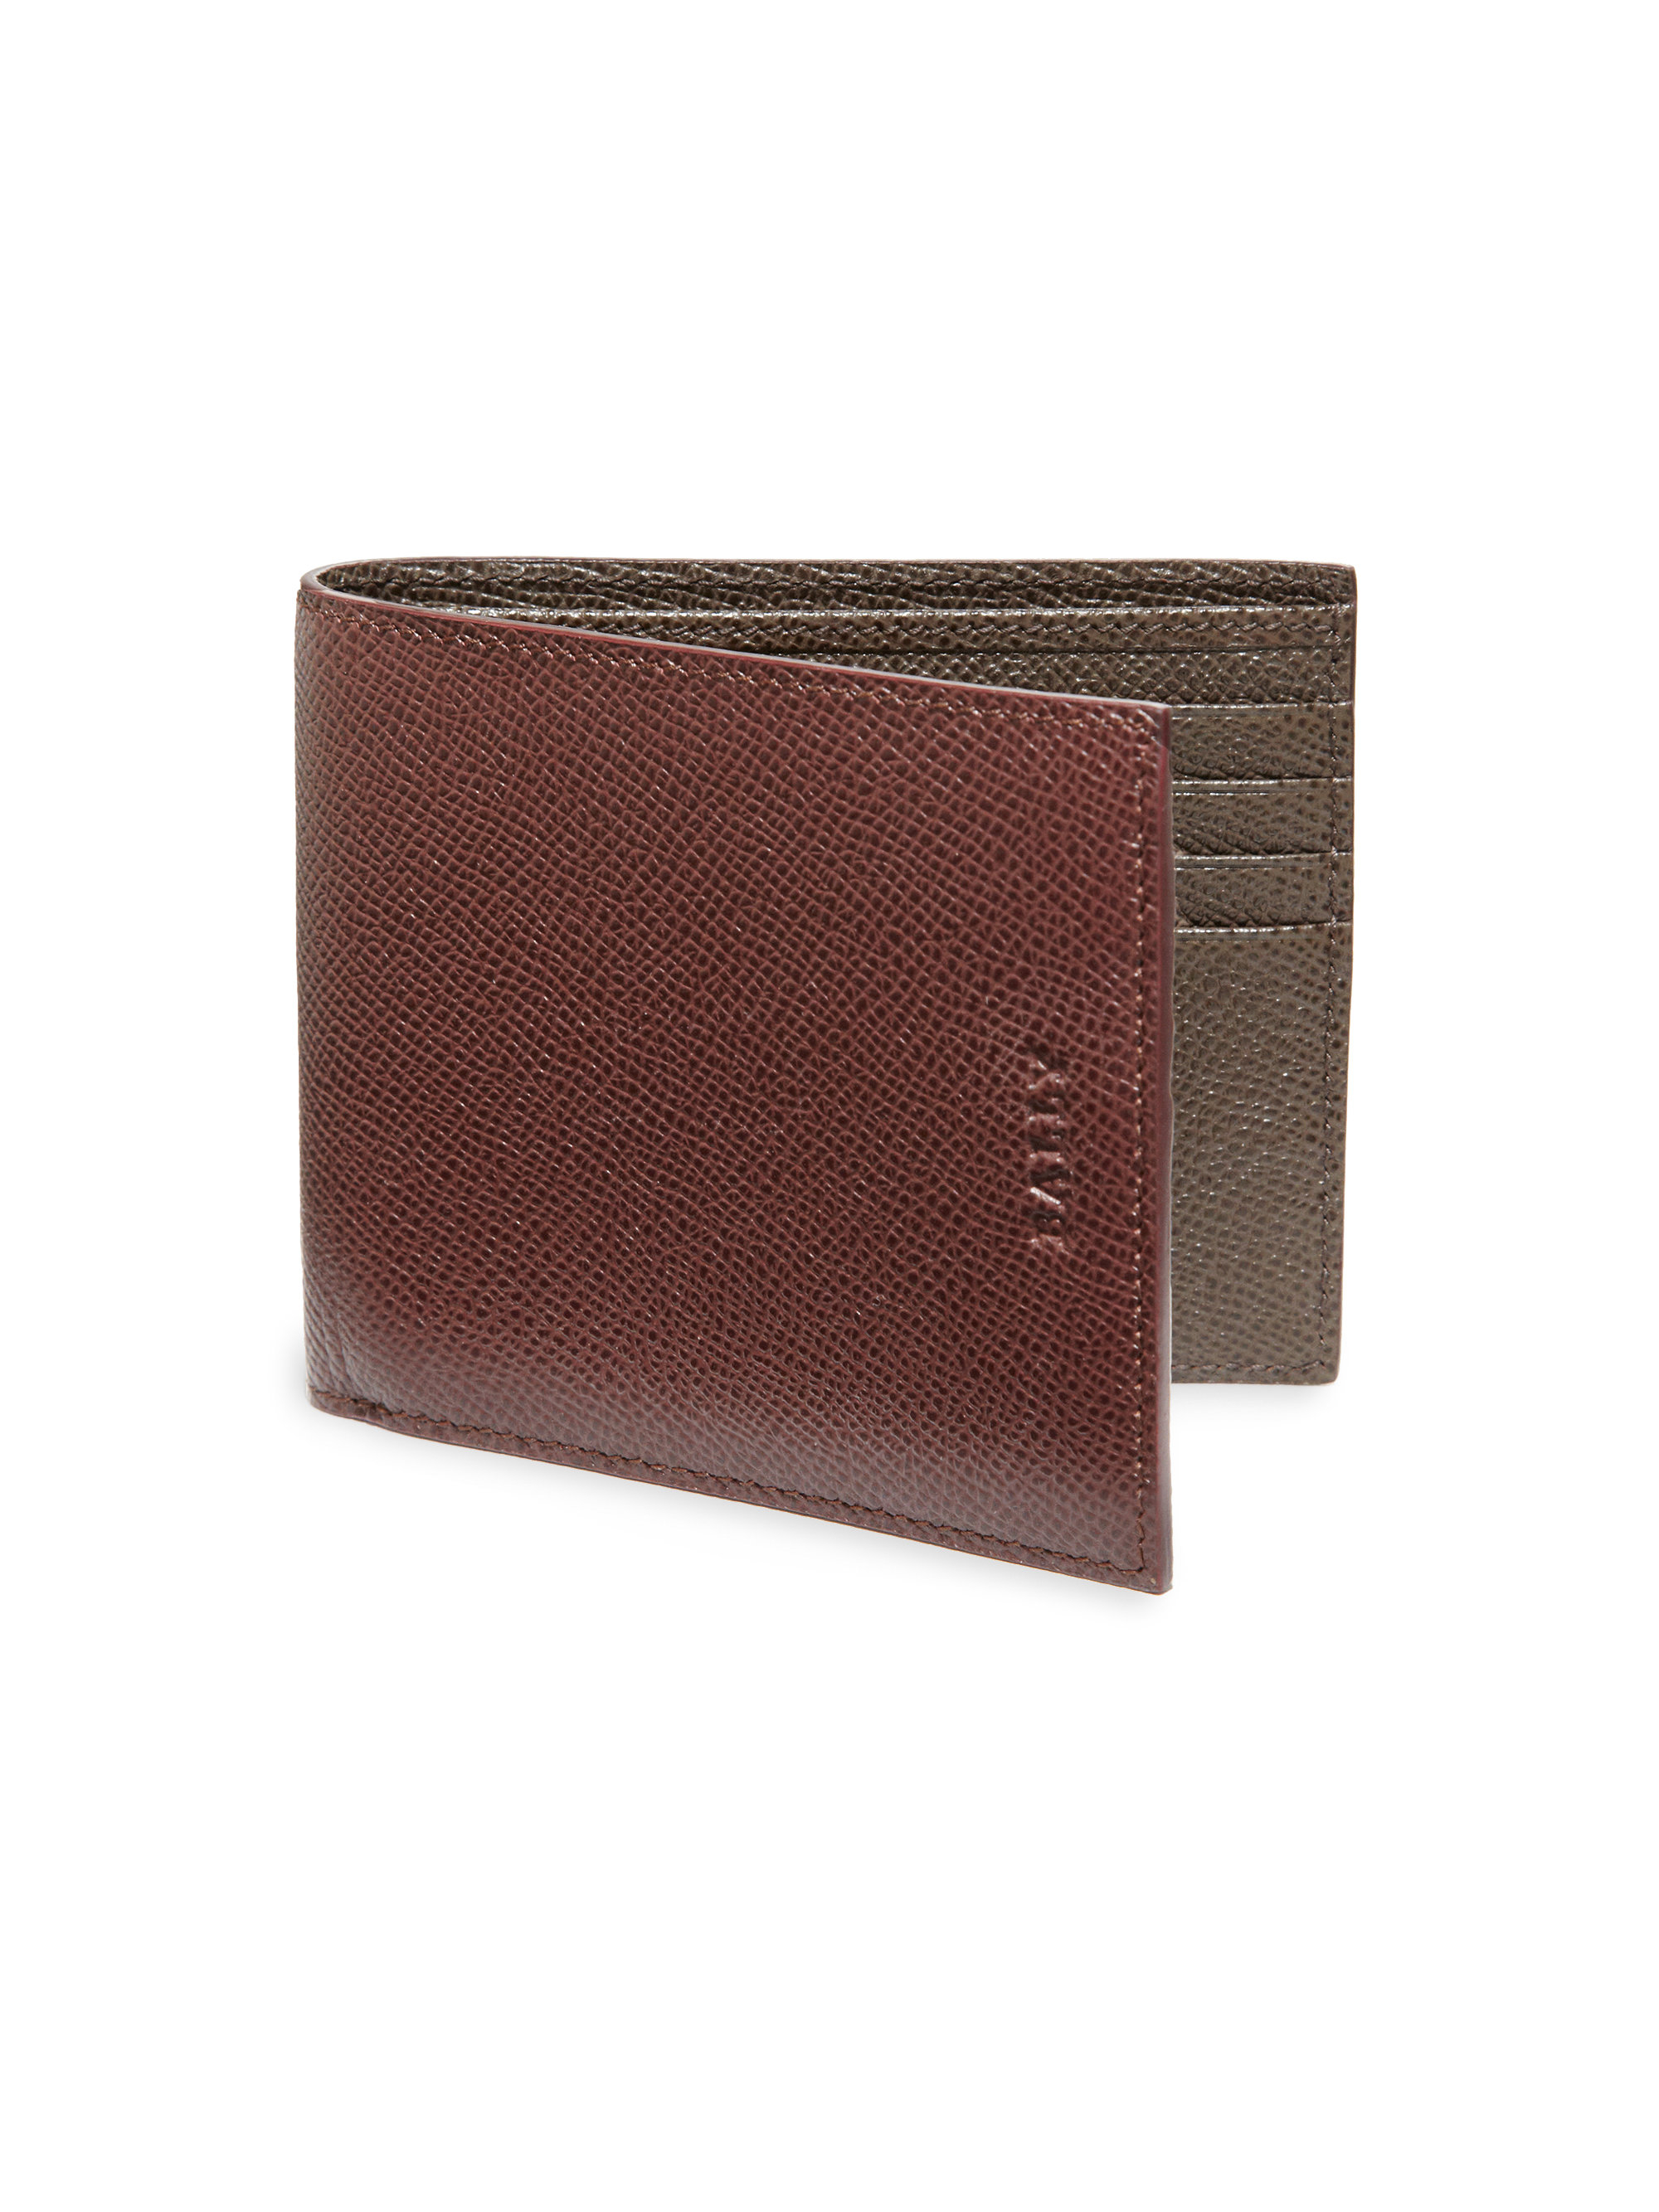 Bally Bollen Leather Wallet in Brown for Men | Lyst